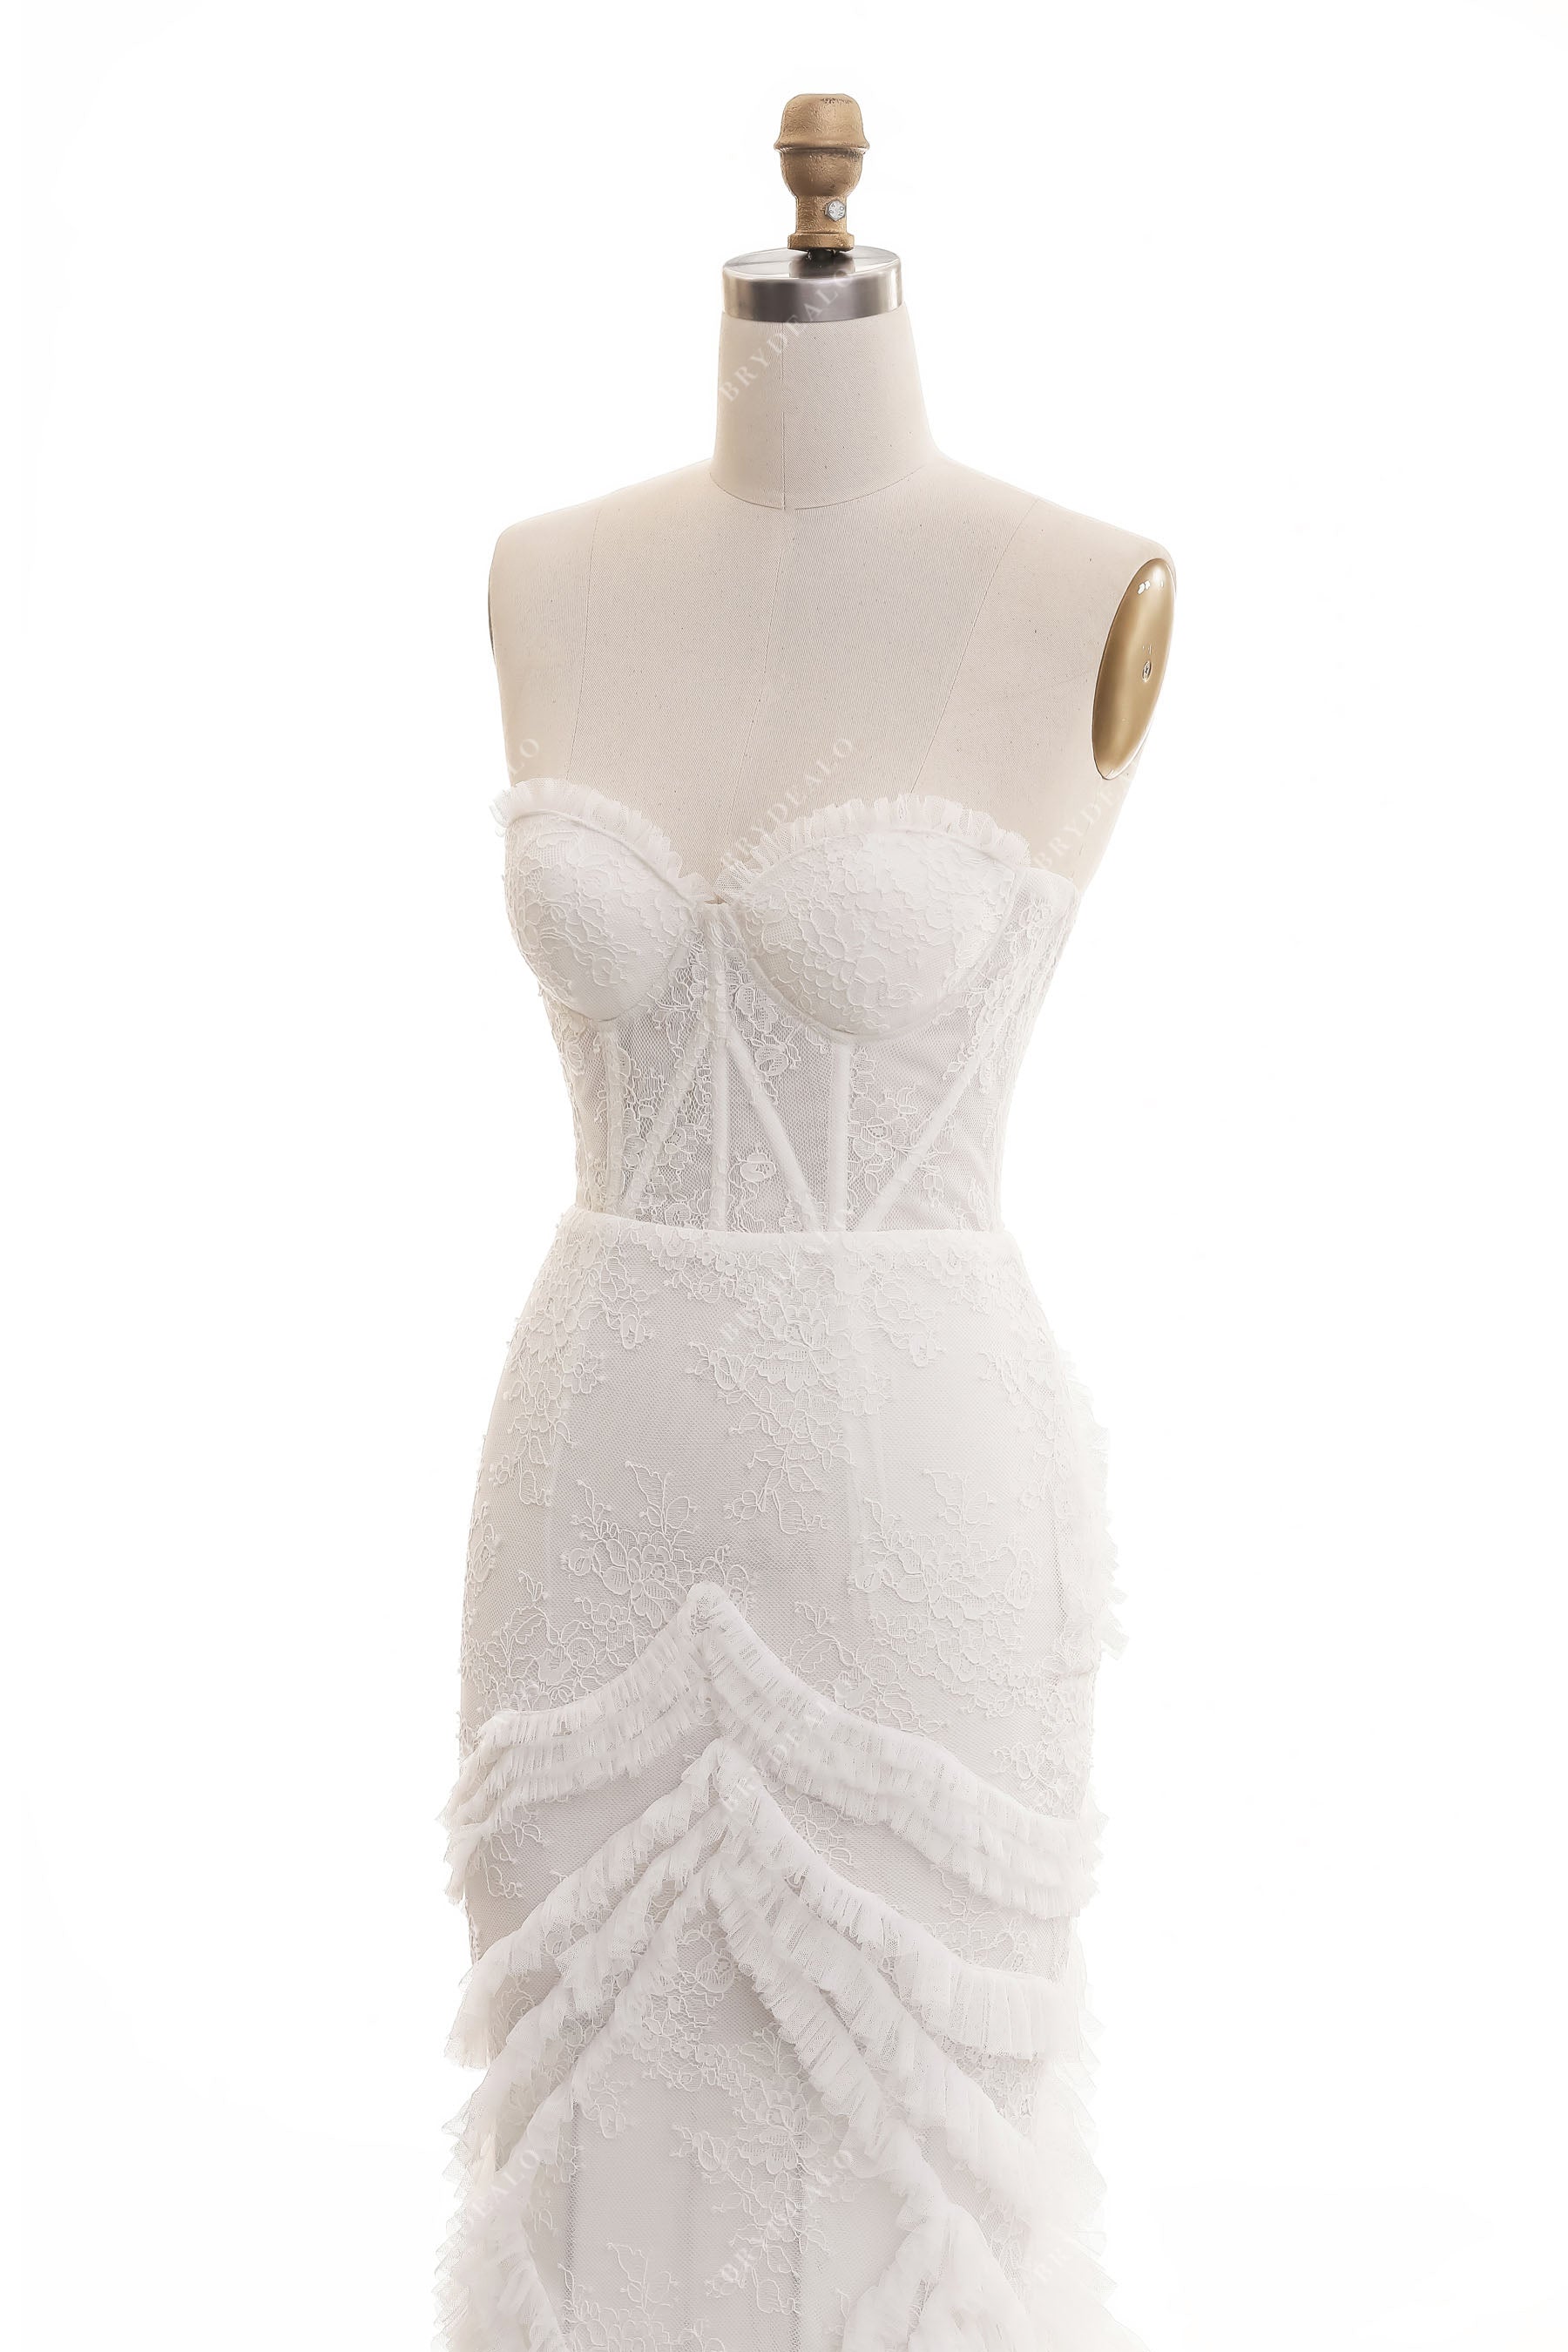 Designer Strapless Corset Lace Tulle Bridal Dress